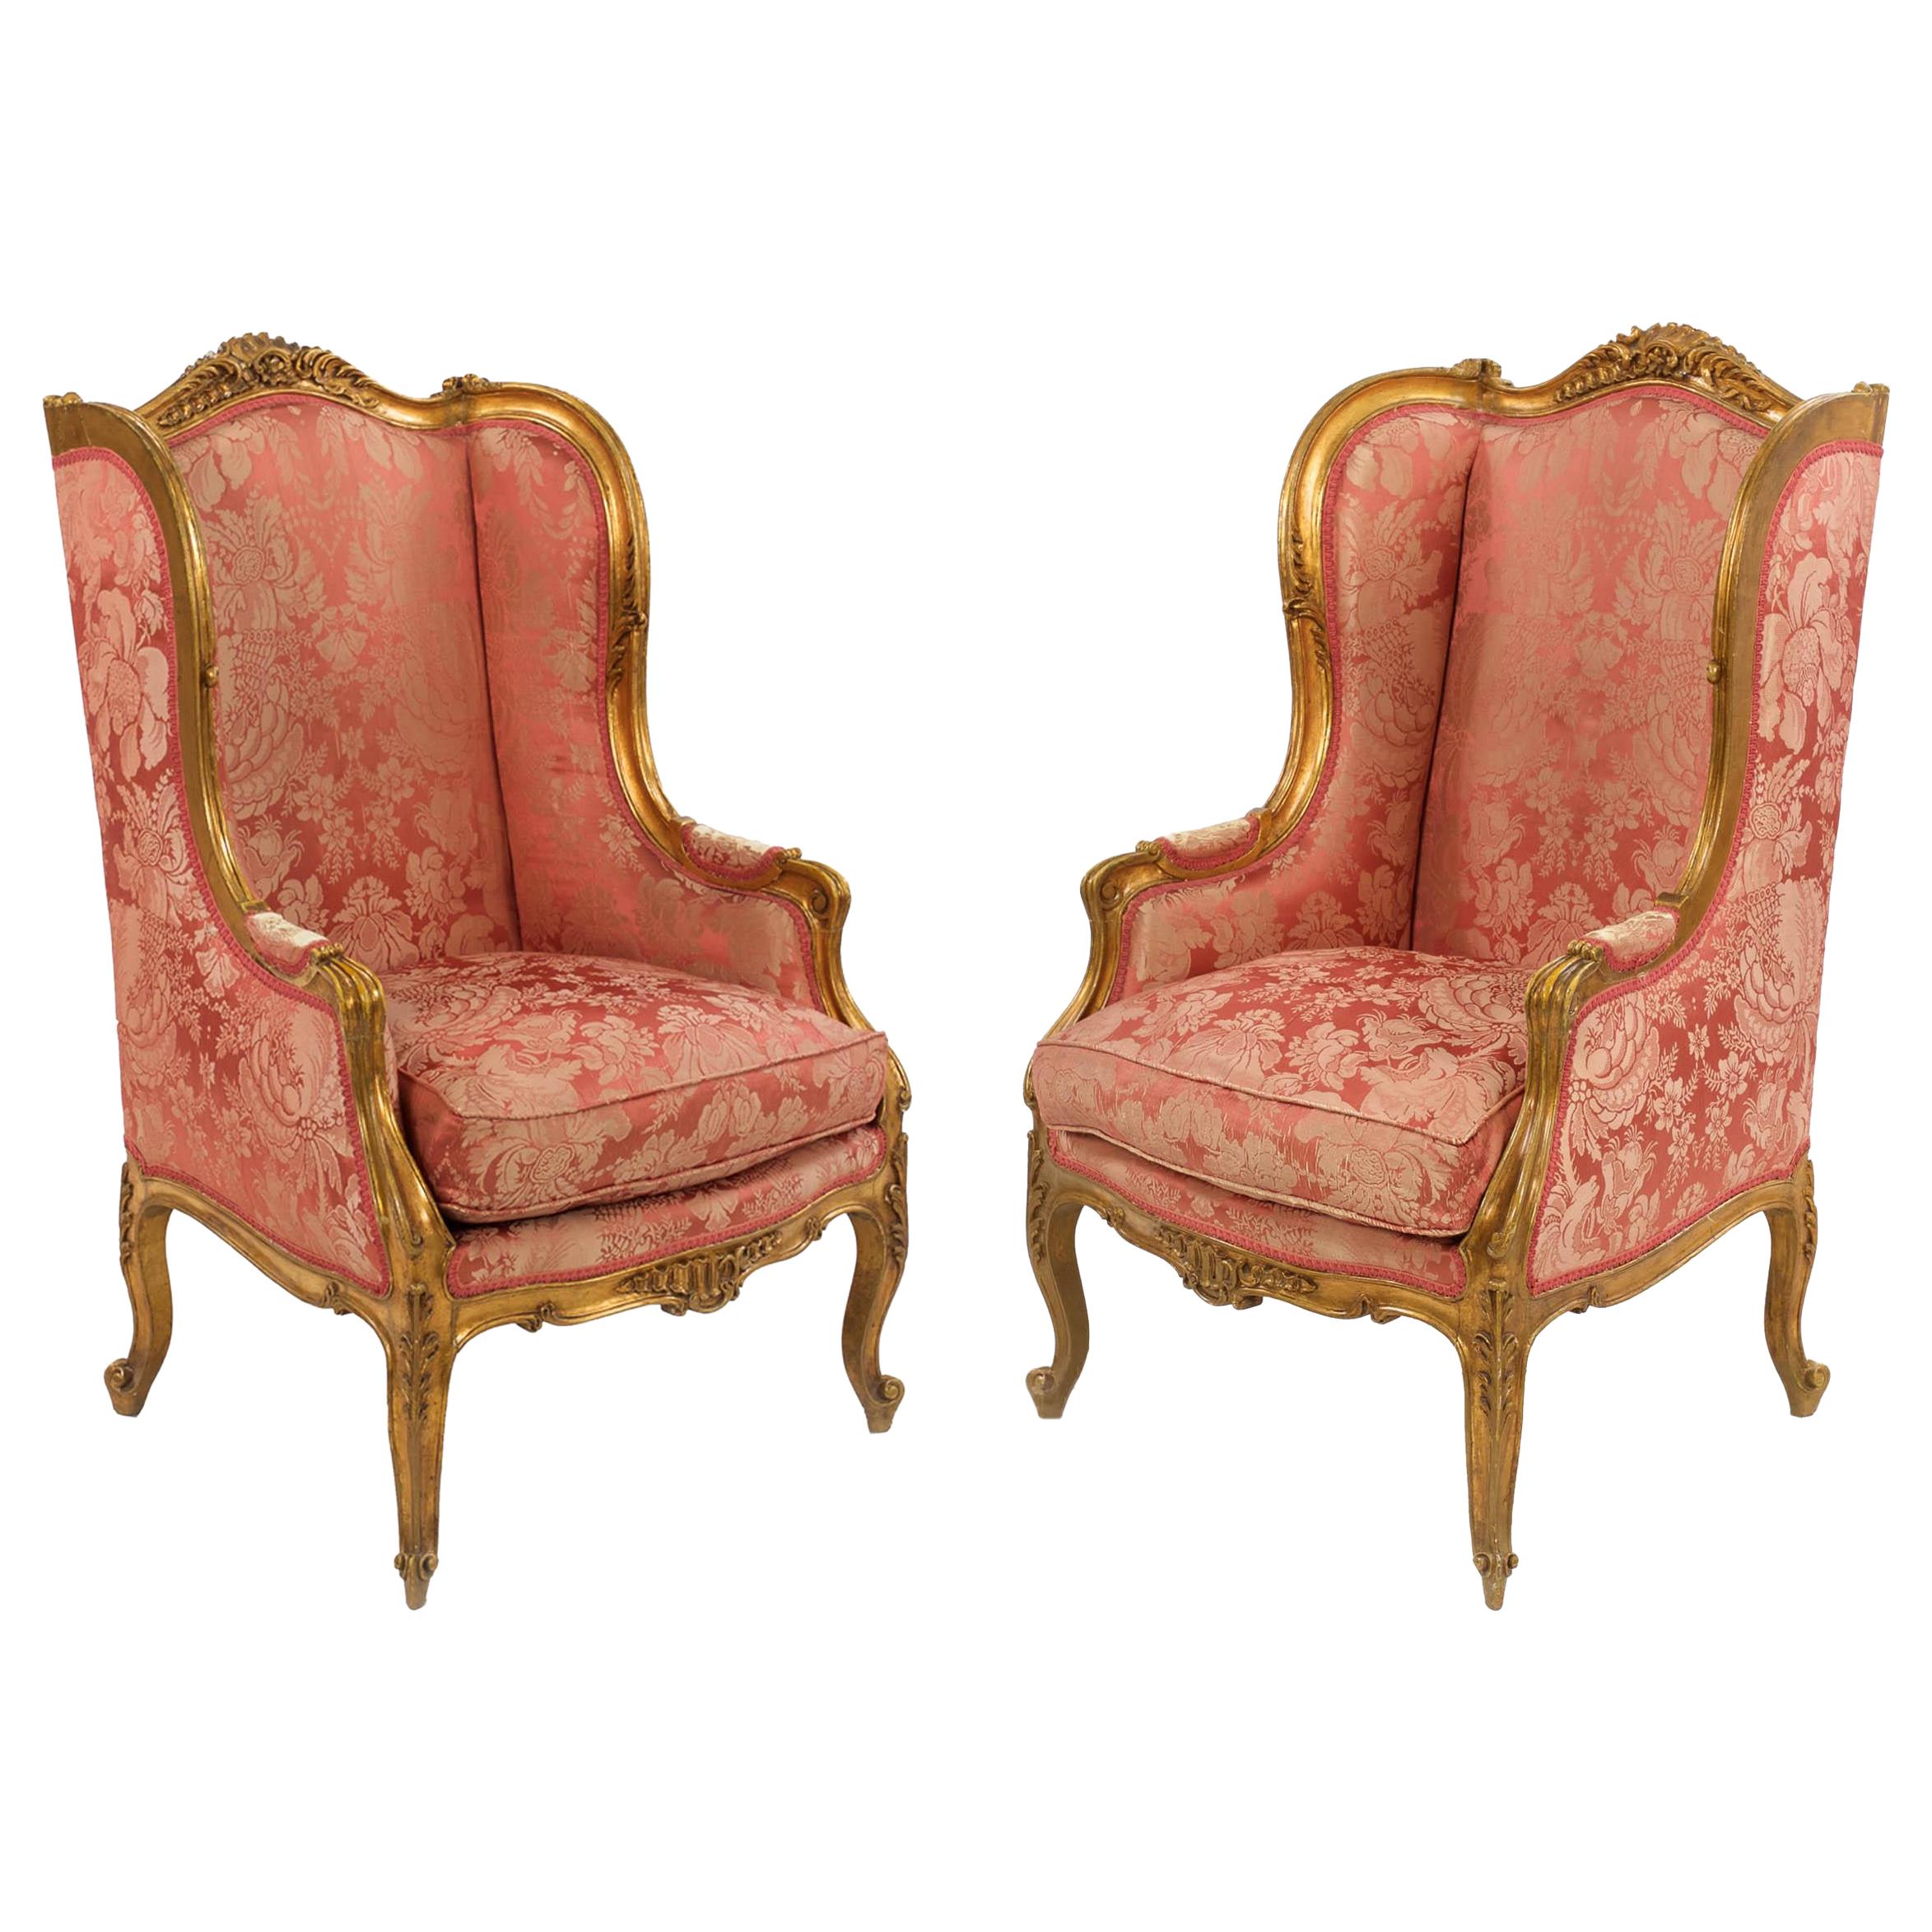 Circa 1880 French Louis XV Style Antique Arm Chairs, a Pair